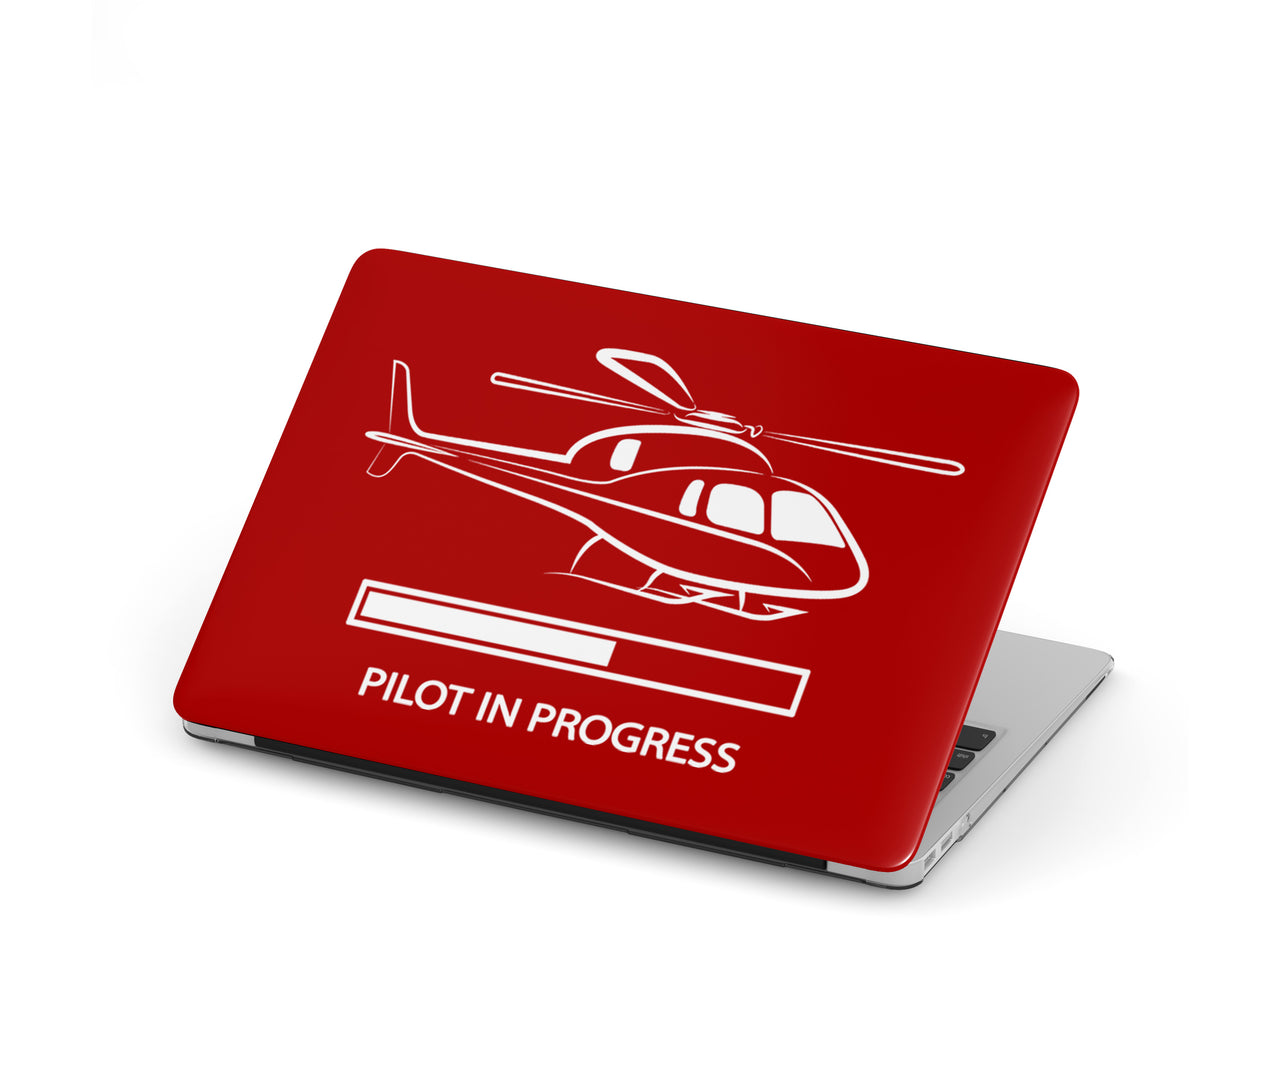 Pilot In Progress (Helicopter) Designed Macbook Cases